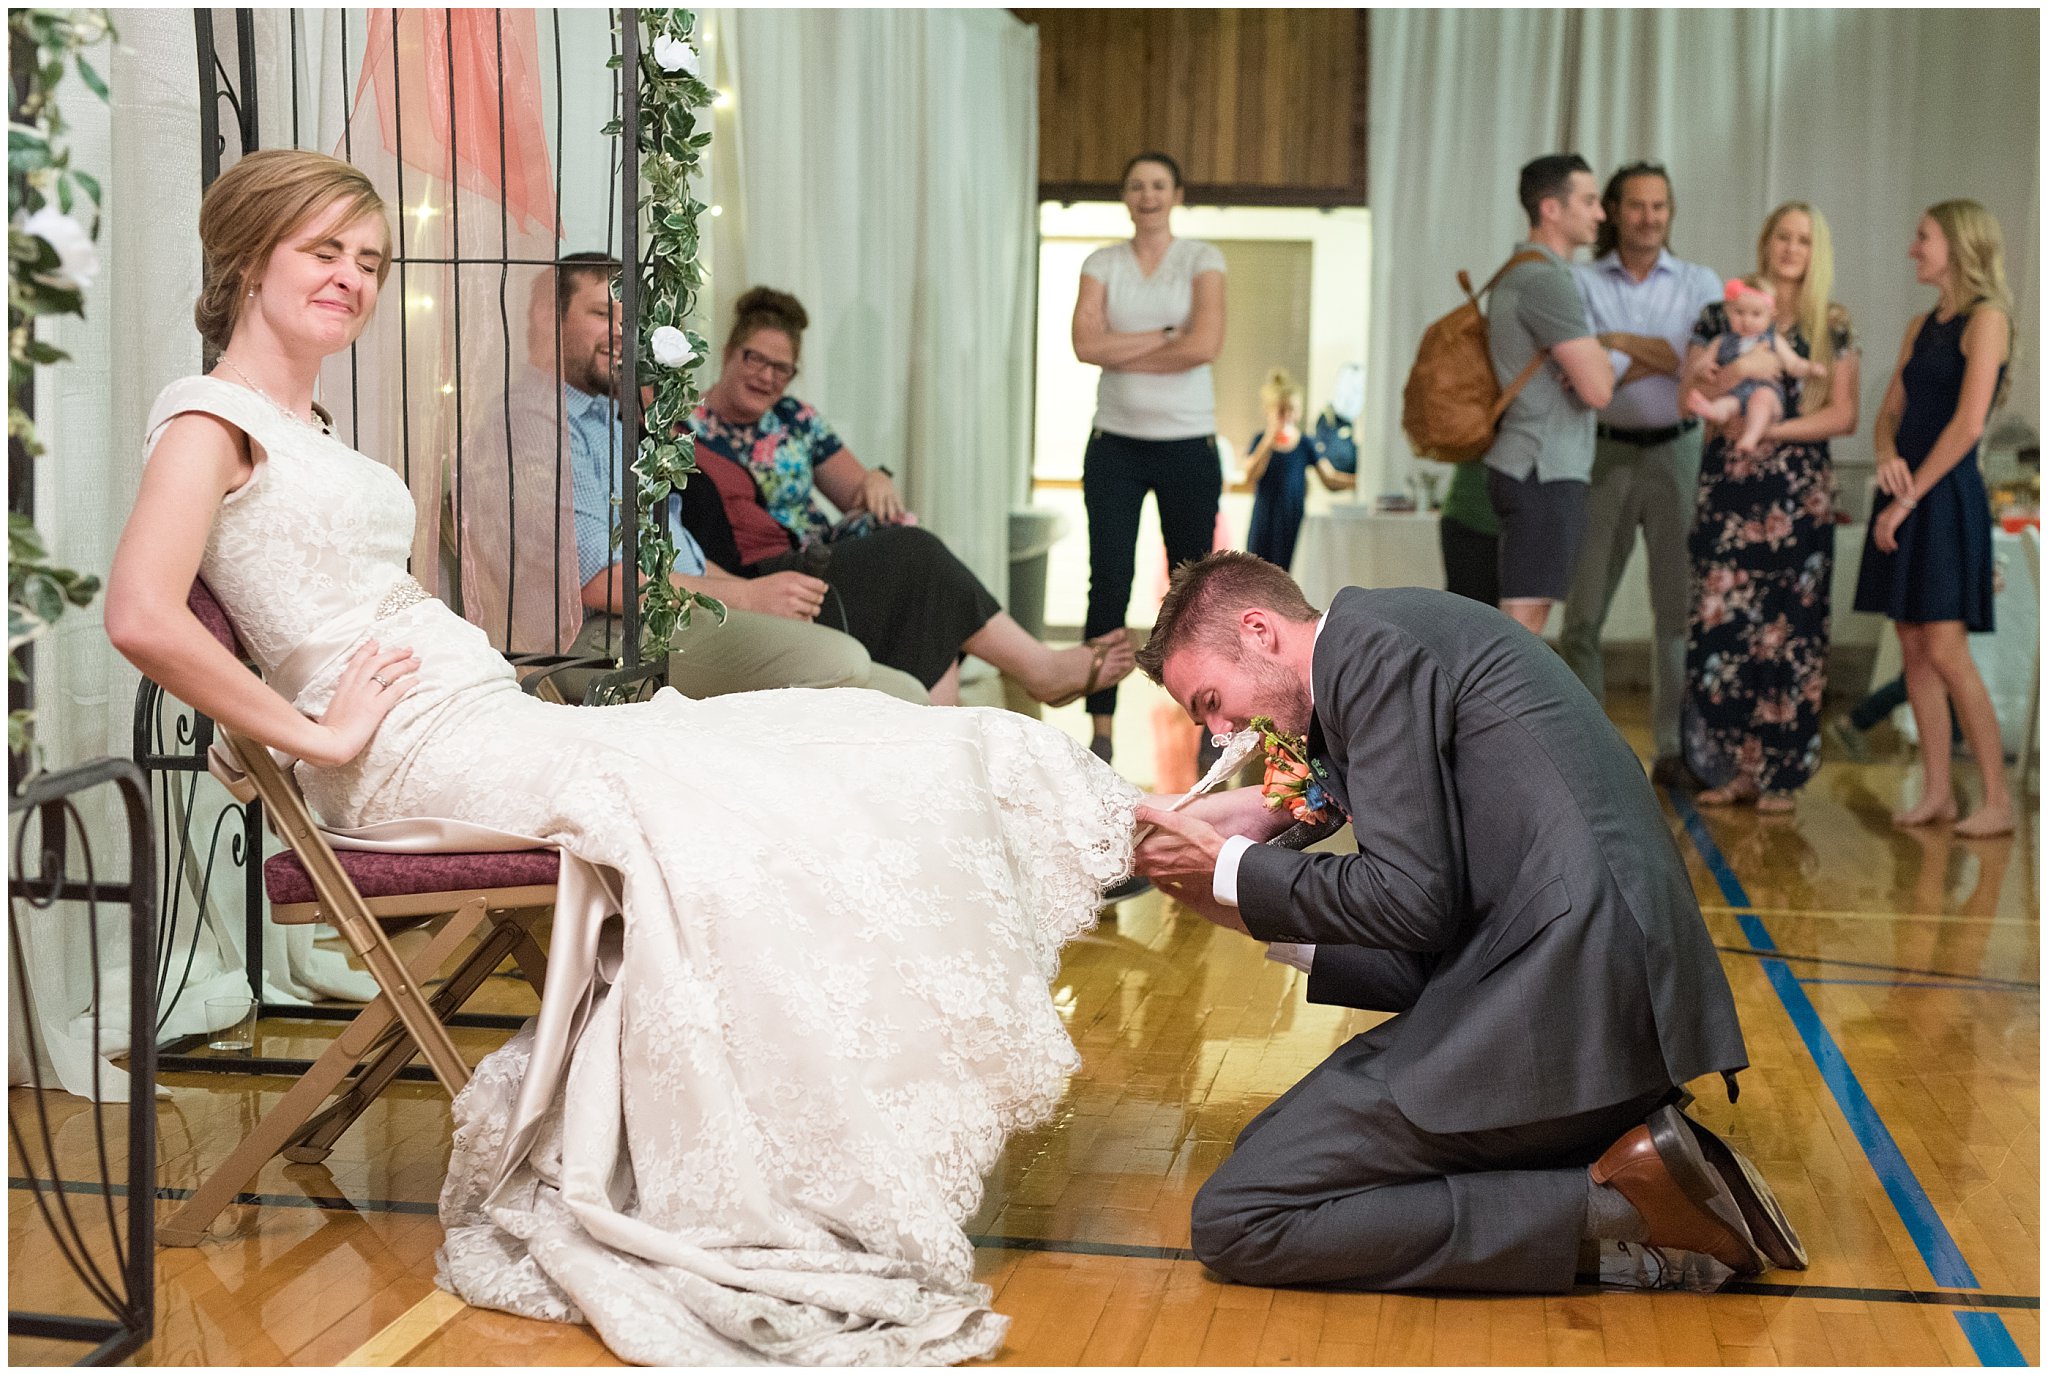 Salt Lake LDS wedding reception | Garter toss | Coral and grey wedding